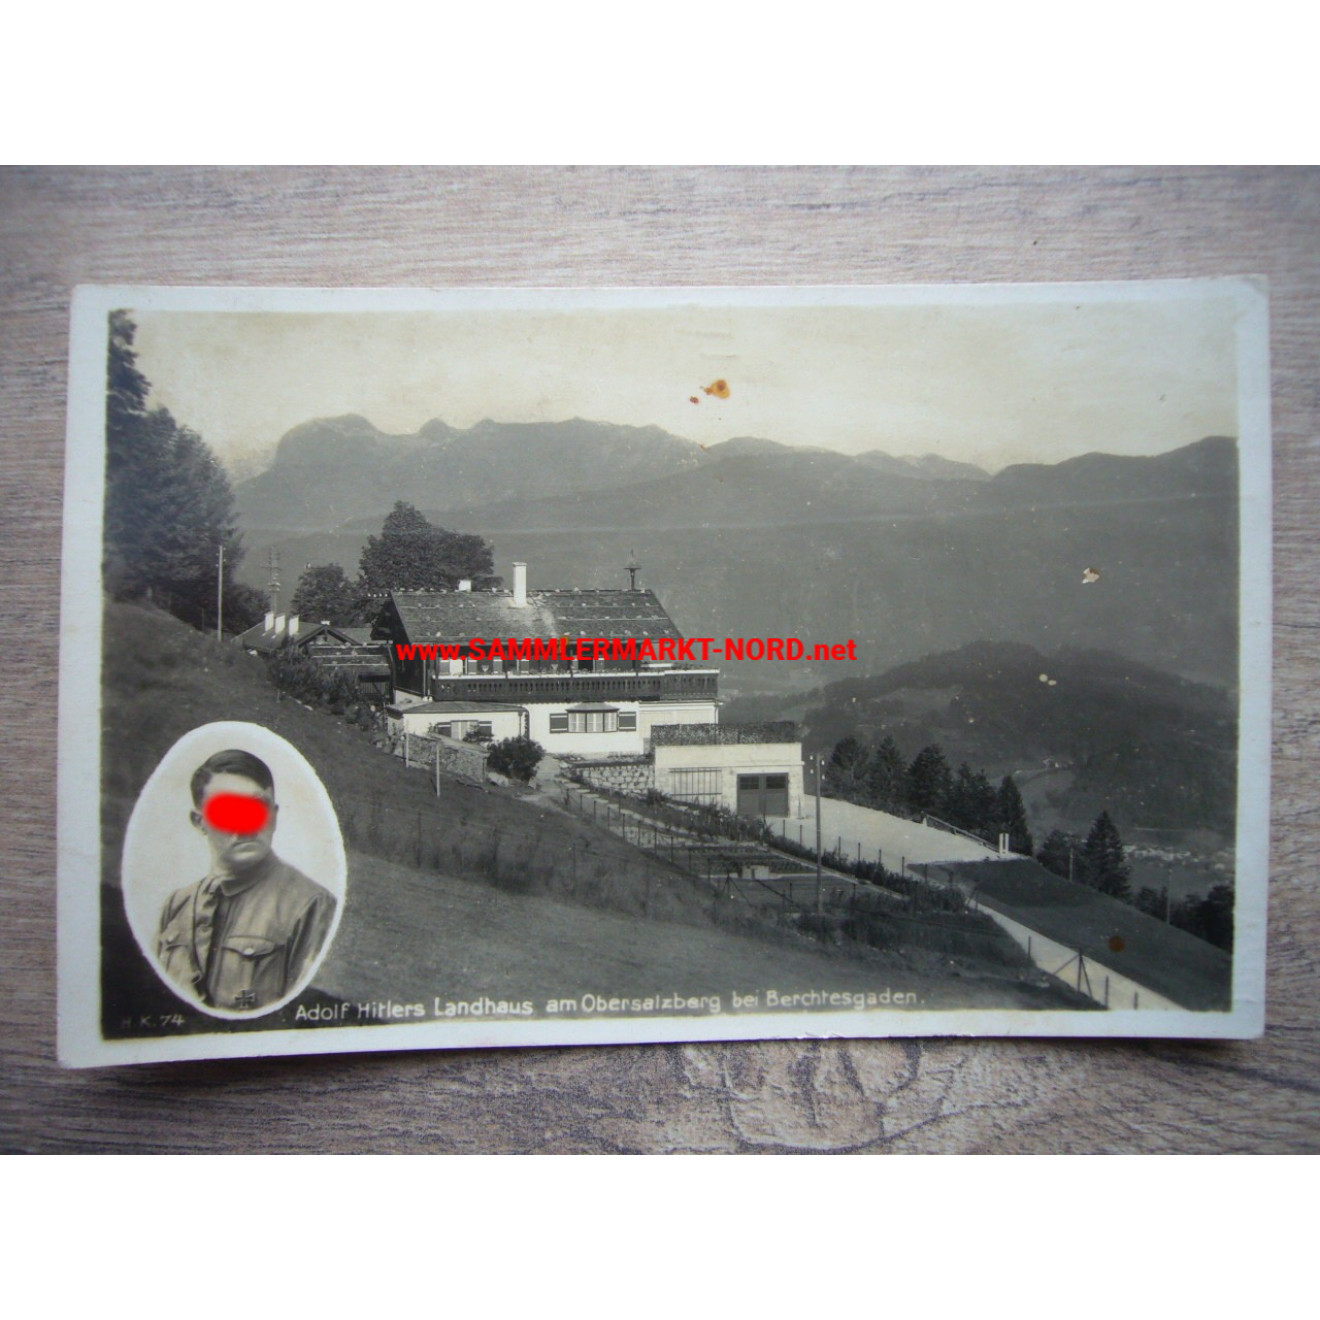 Adolf Hitler's country house on Obersalzberg - postcard